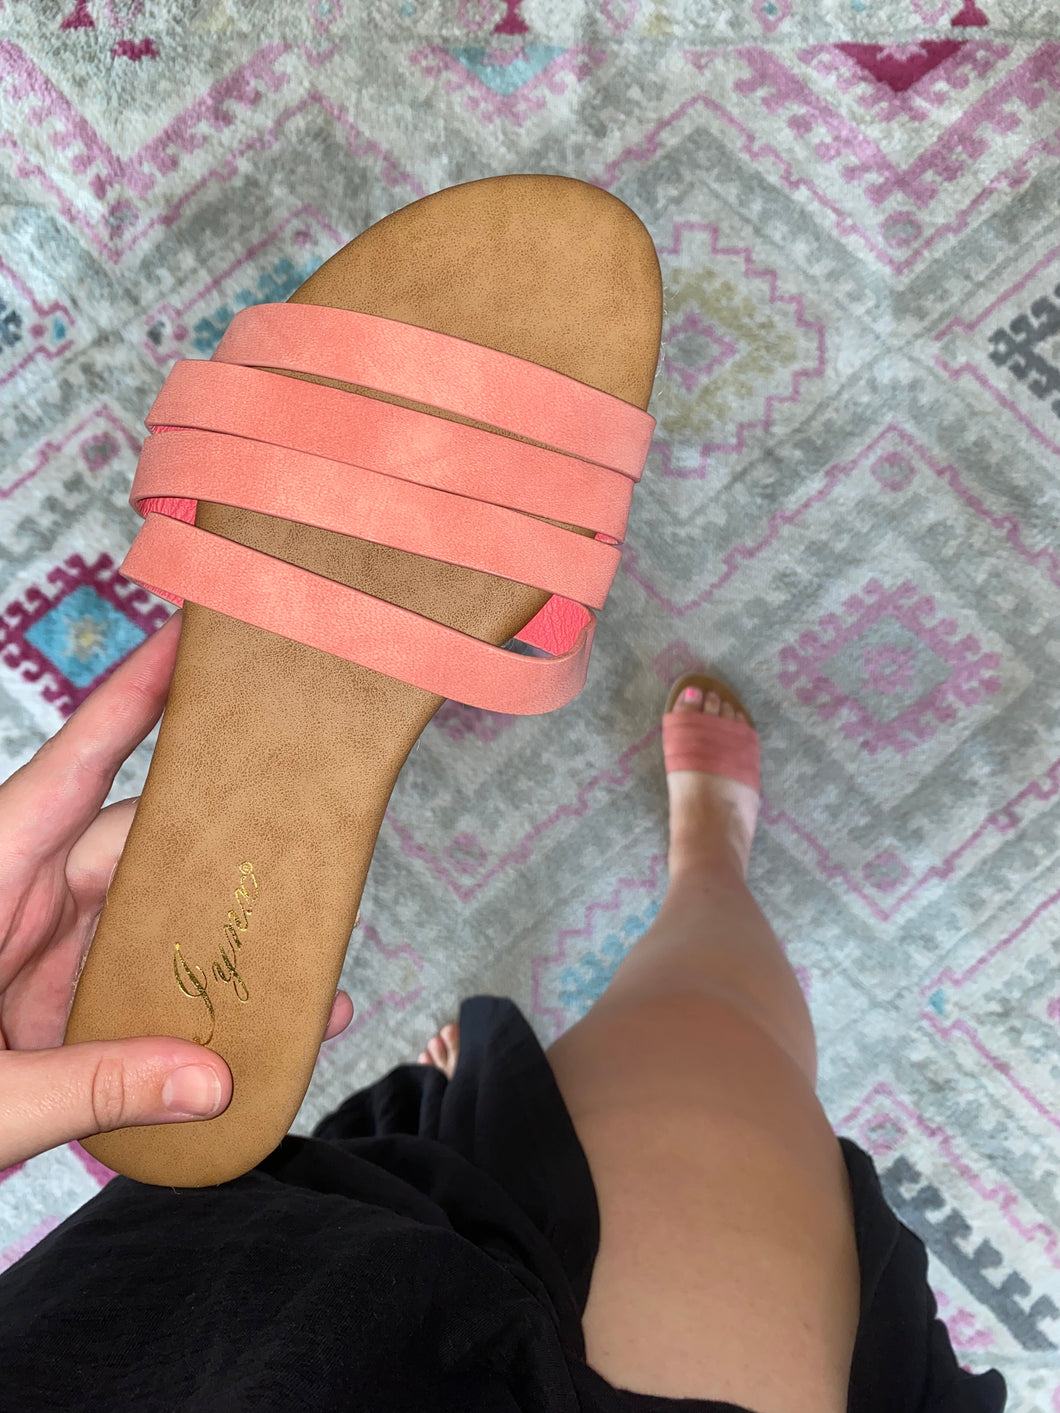 Pink Strappy Sandals